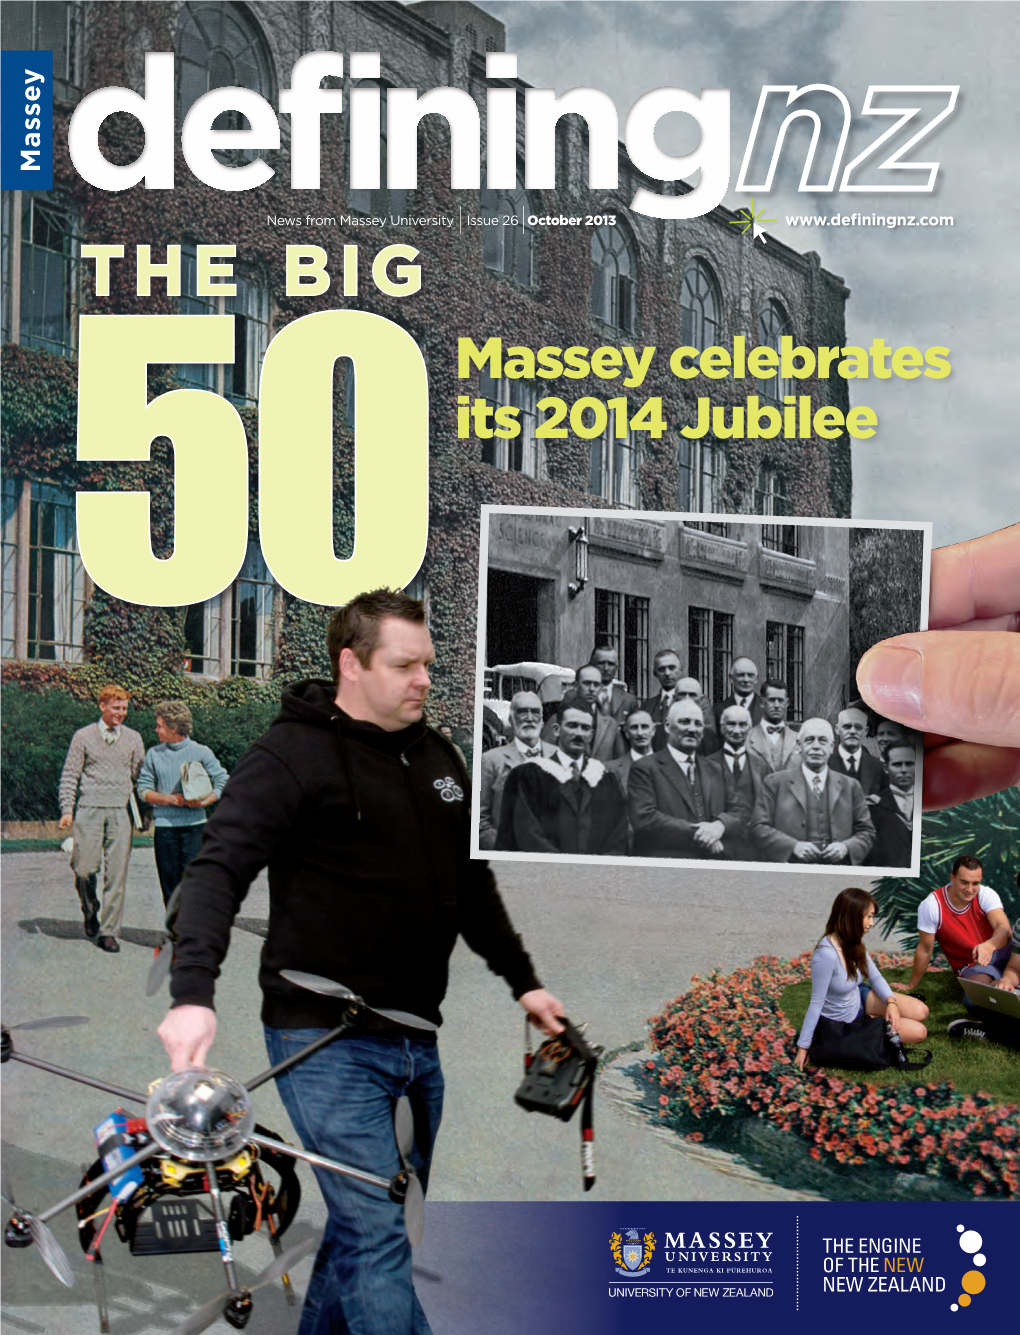 THE BIG Massey Celebrates 50 Its 2014 Jubilee